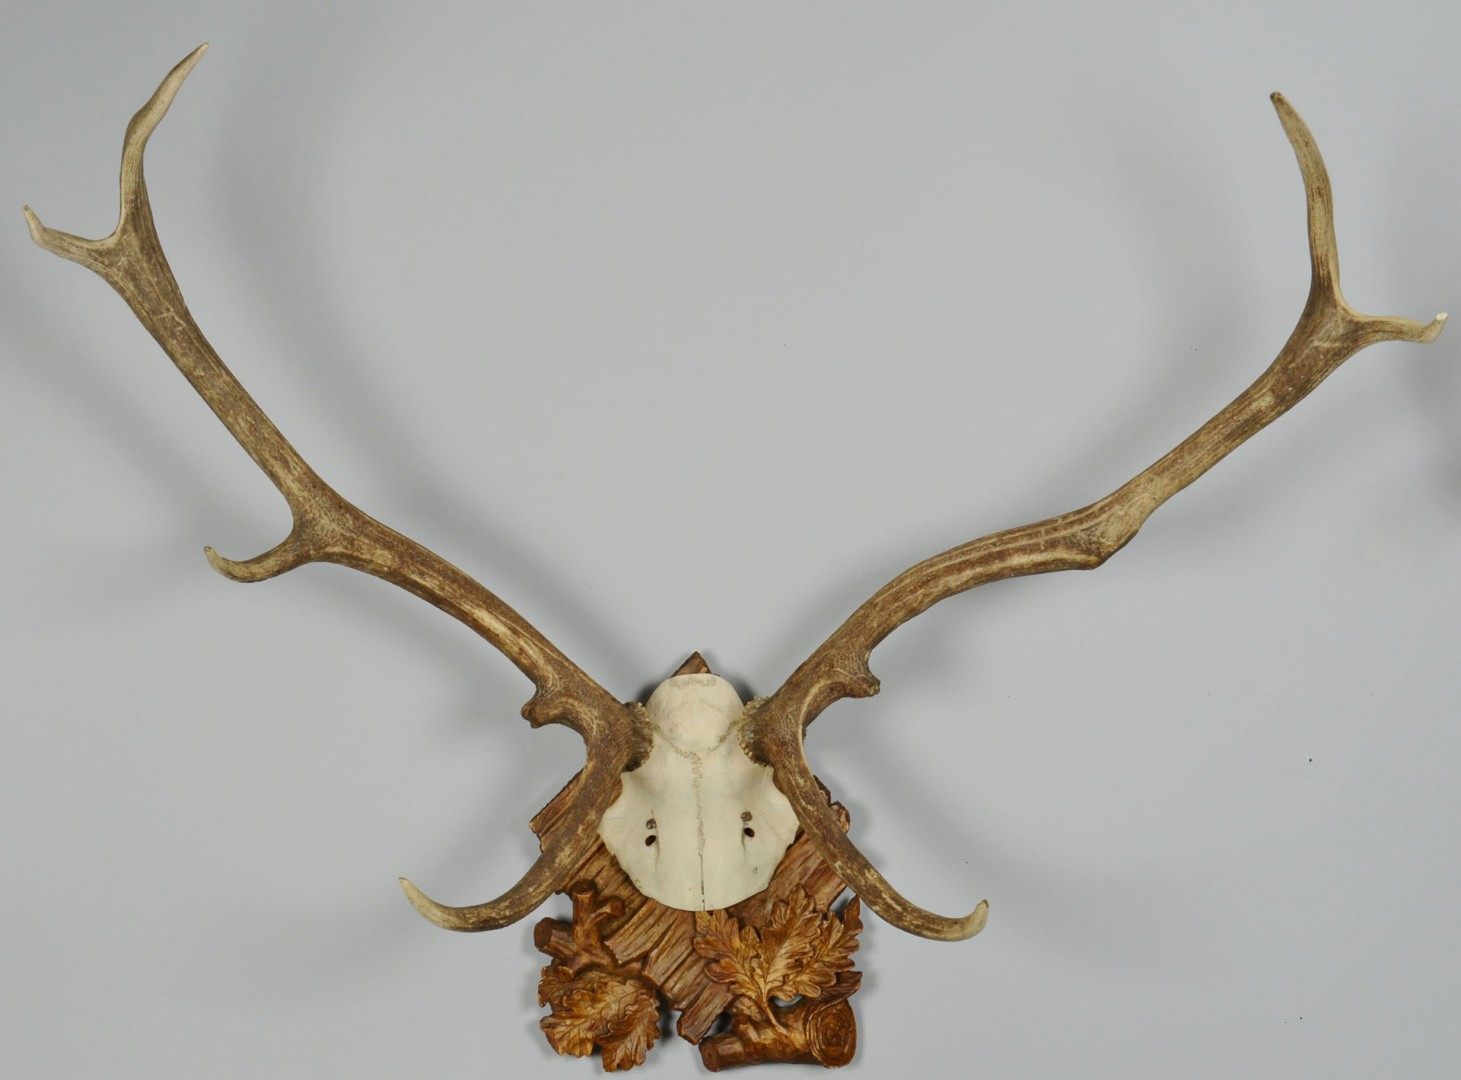 Lot 553: 2 Marked Elk Antlers on Carved Plaques